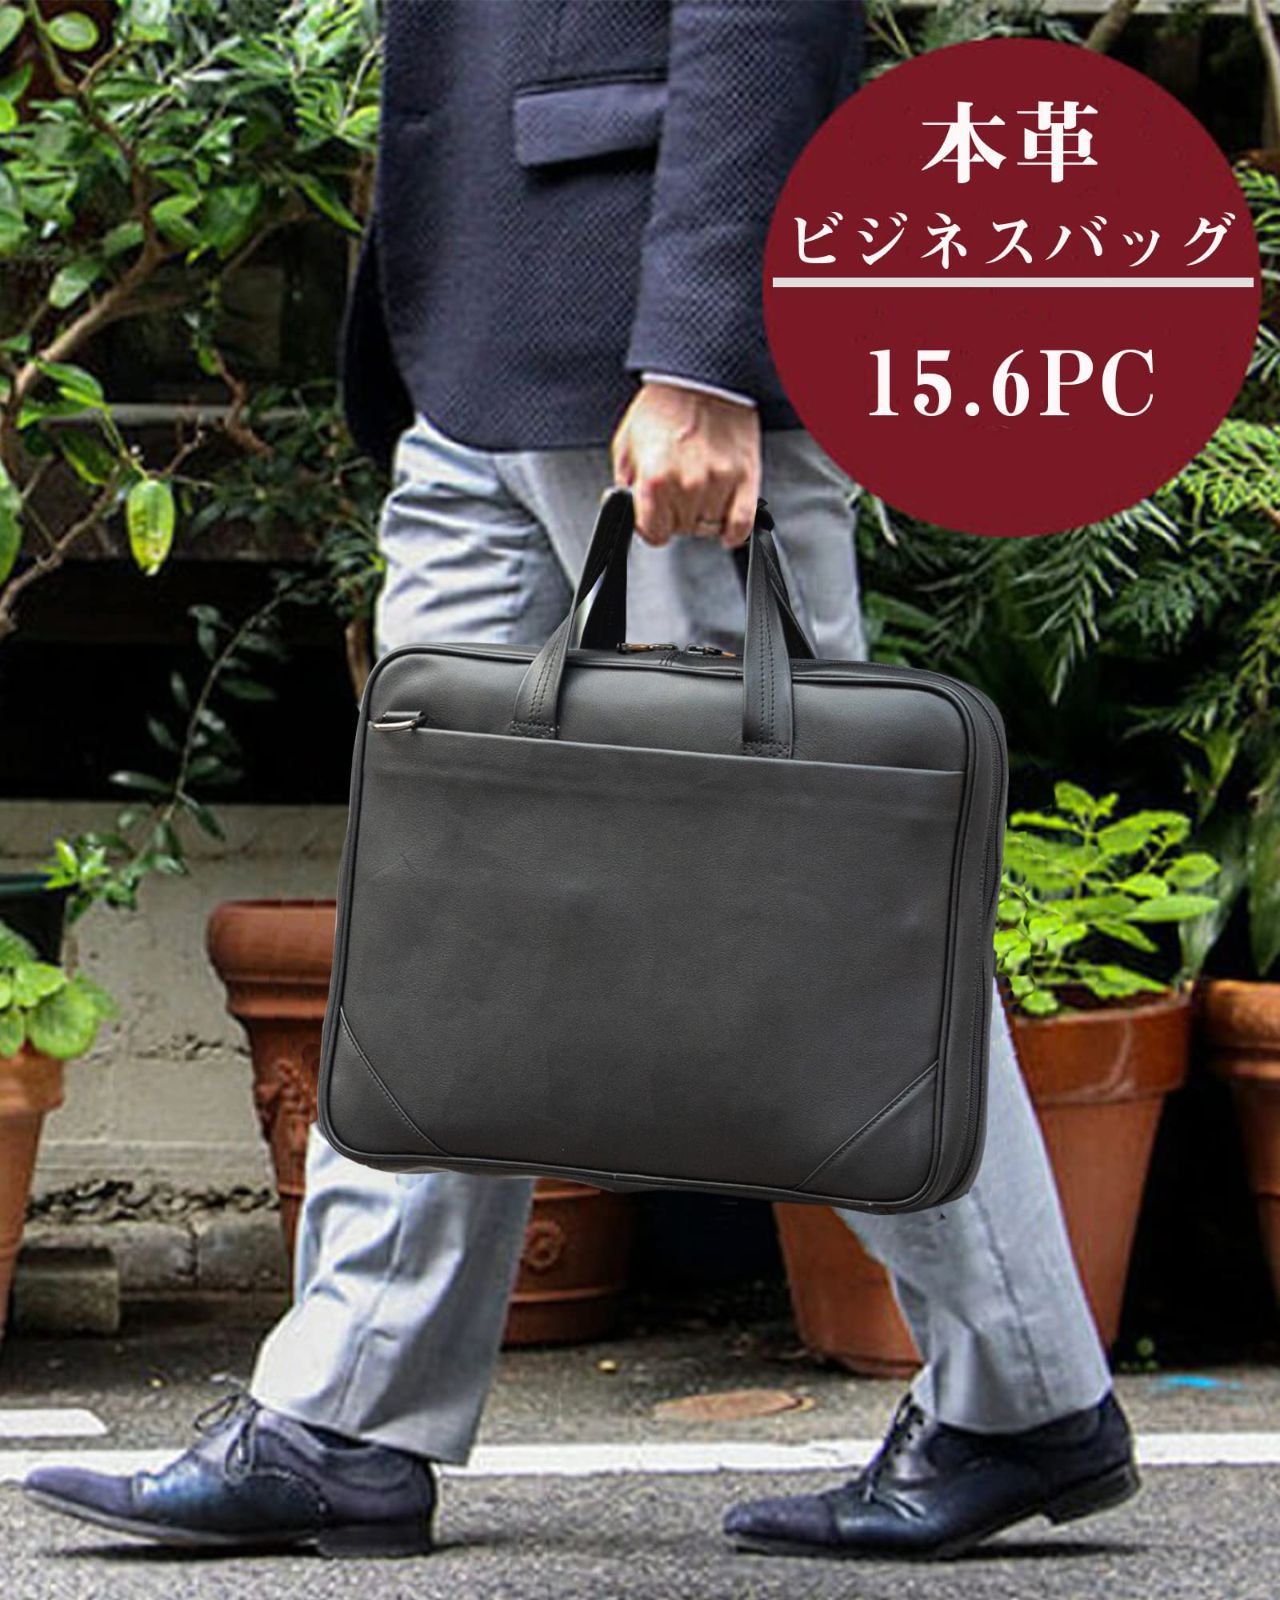 Masa Kawa] 雅革 ビジネスバッグ メンズ 本革 薄型 大容量 ブリー